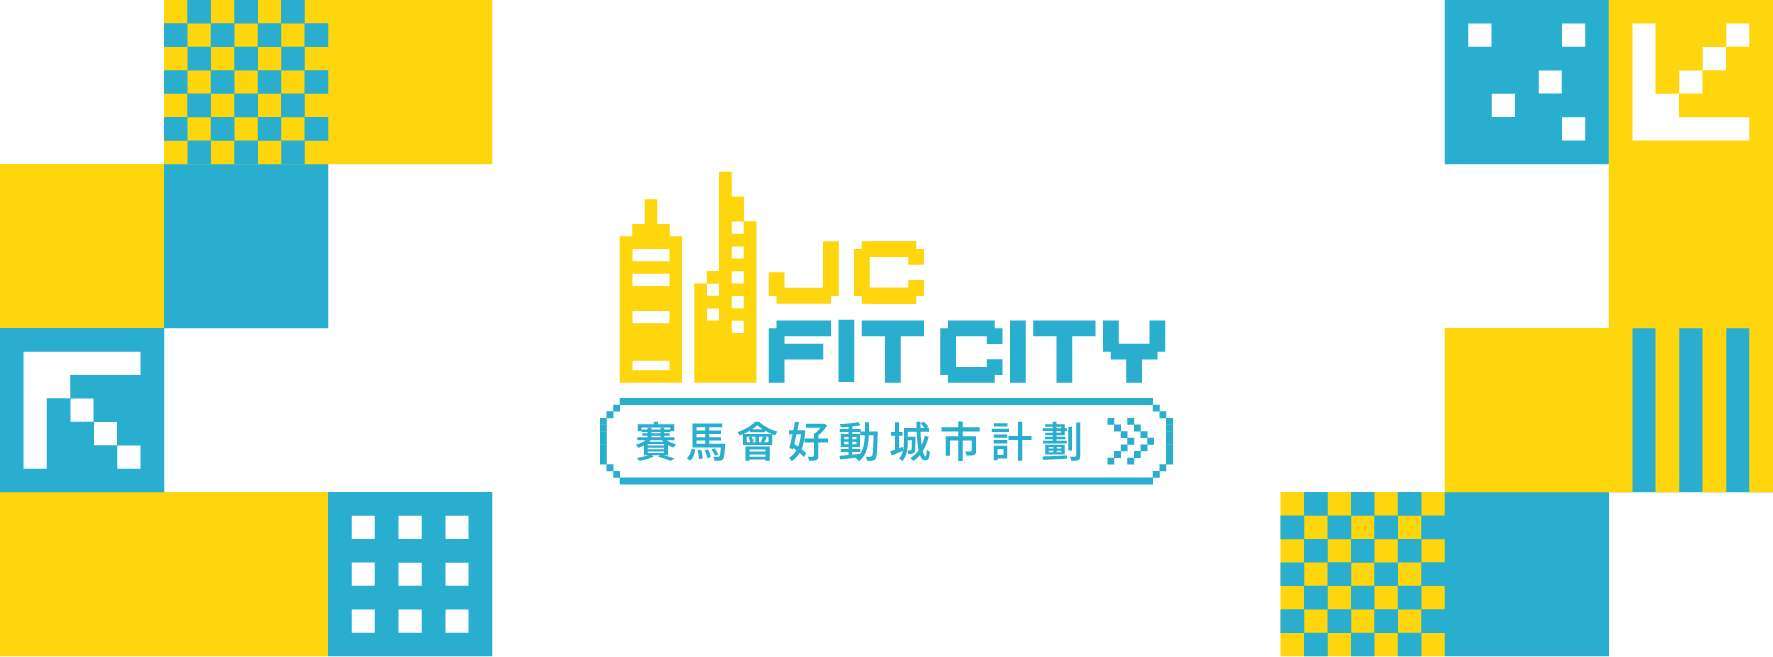 JC FIT CITY-facebookBanner-template-opening-01